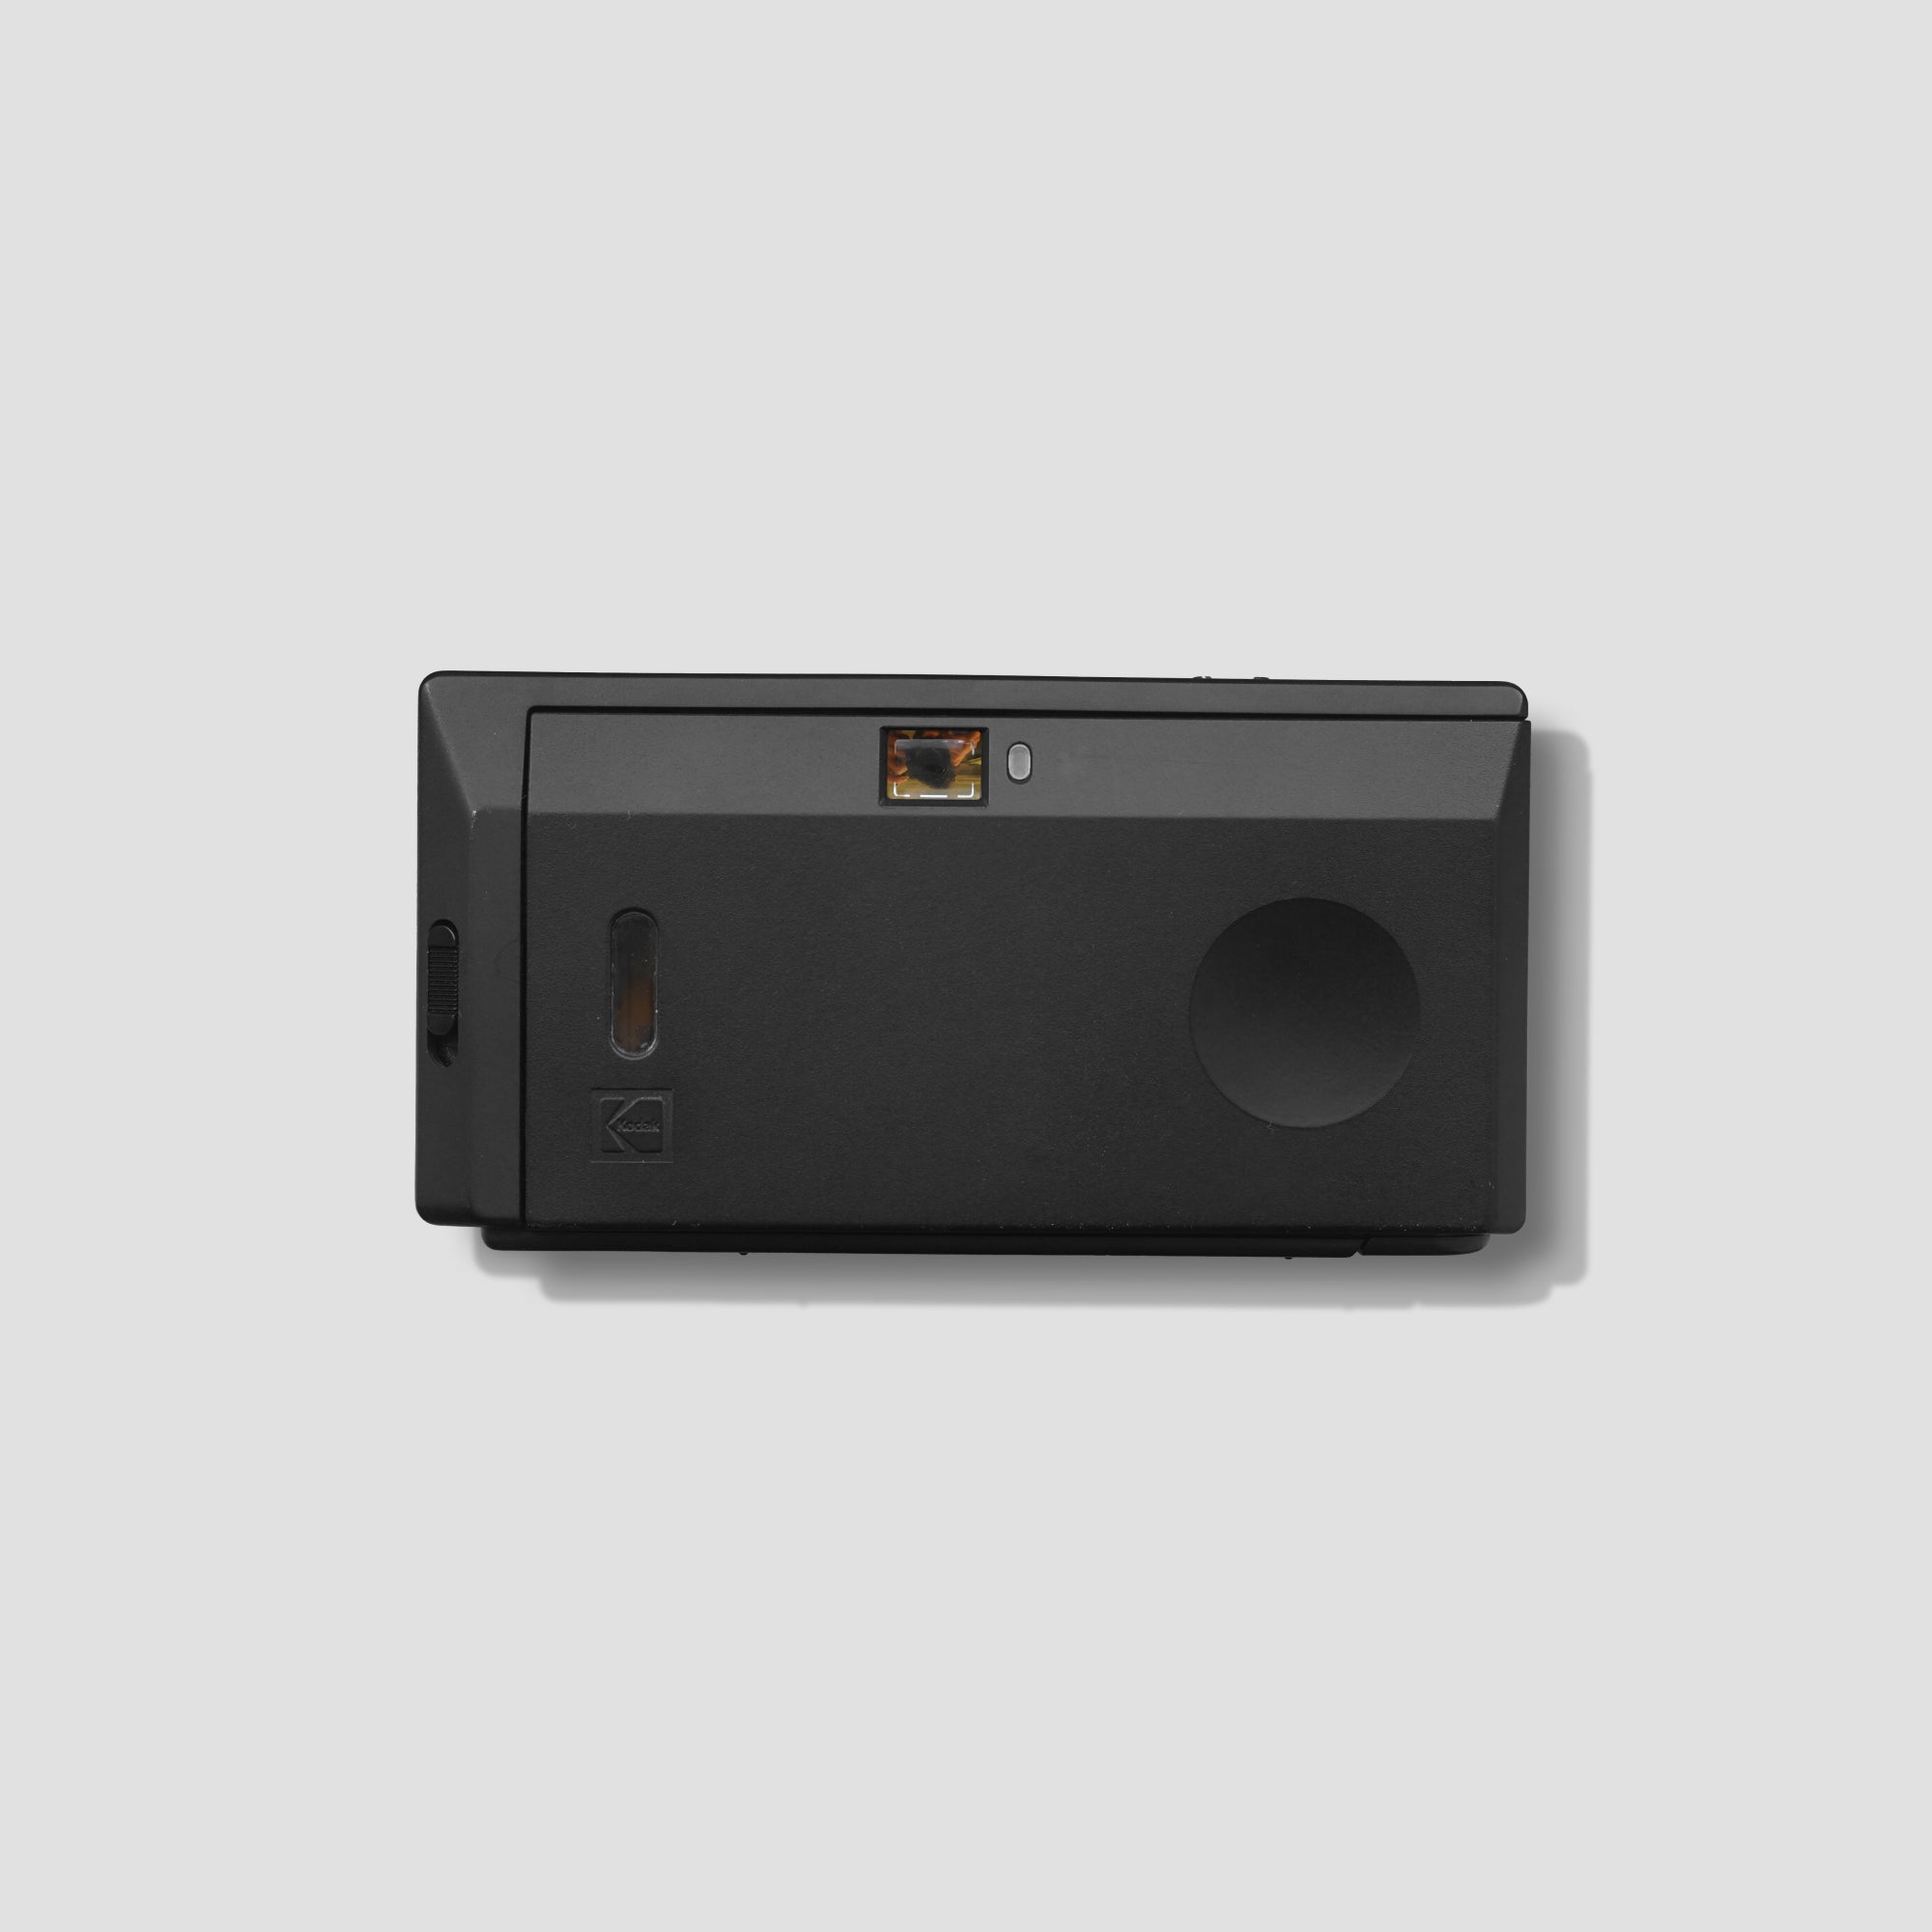 Kodak S300MD